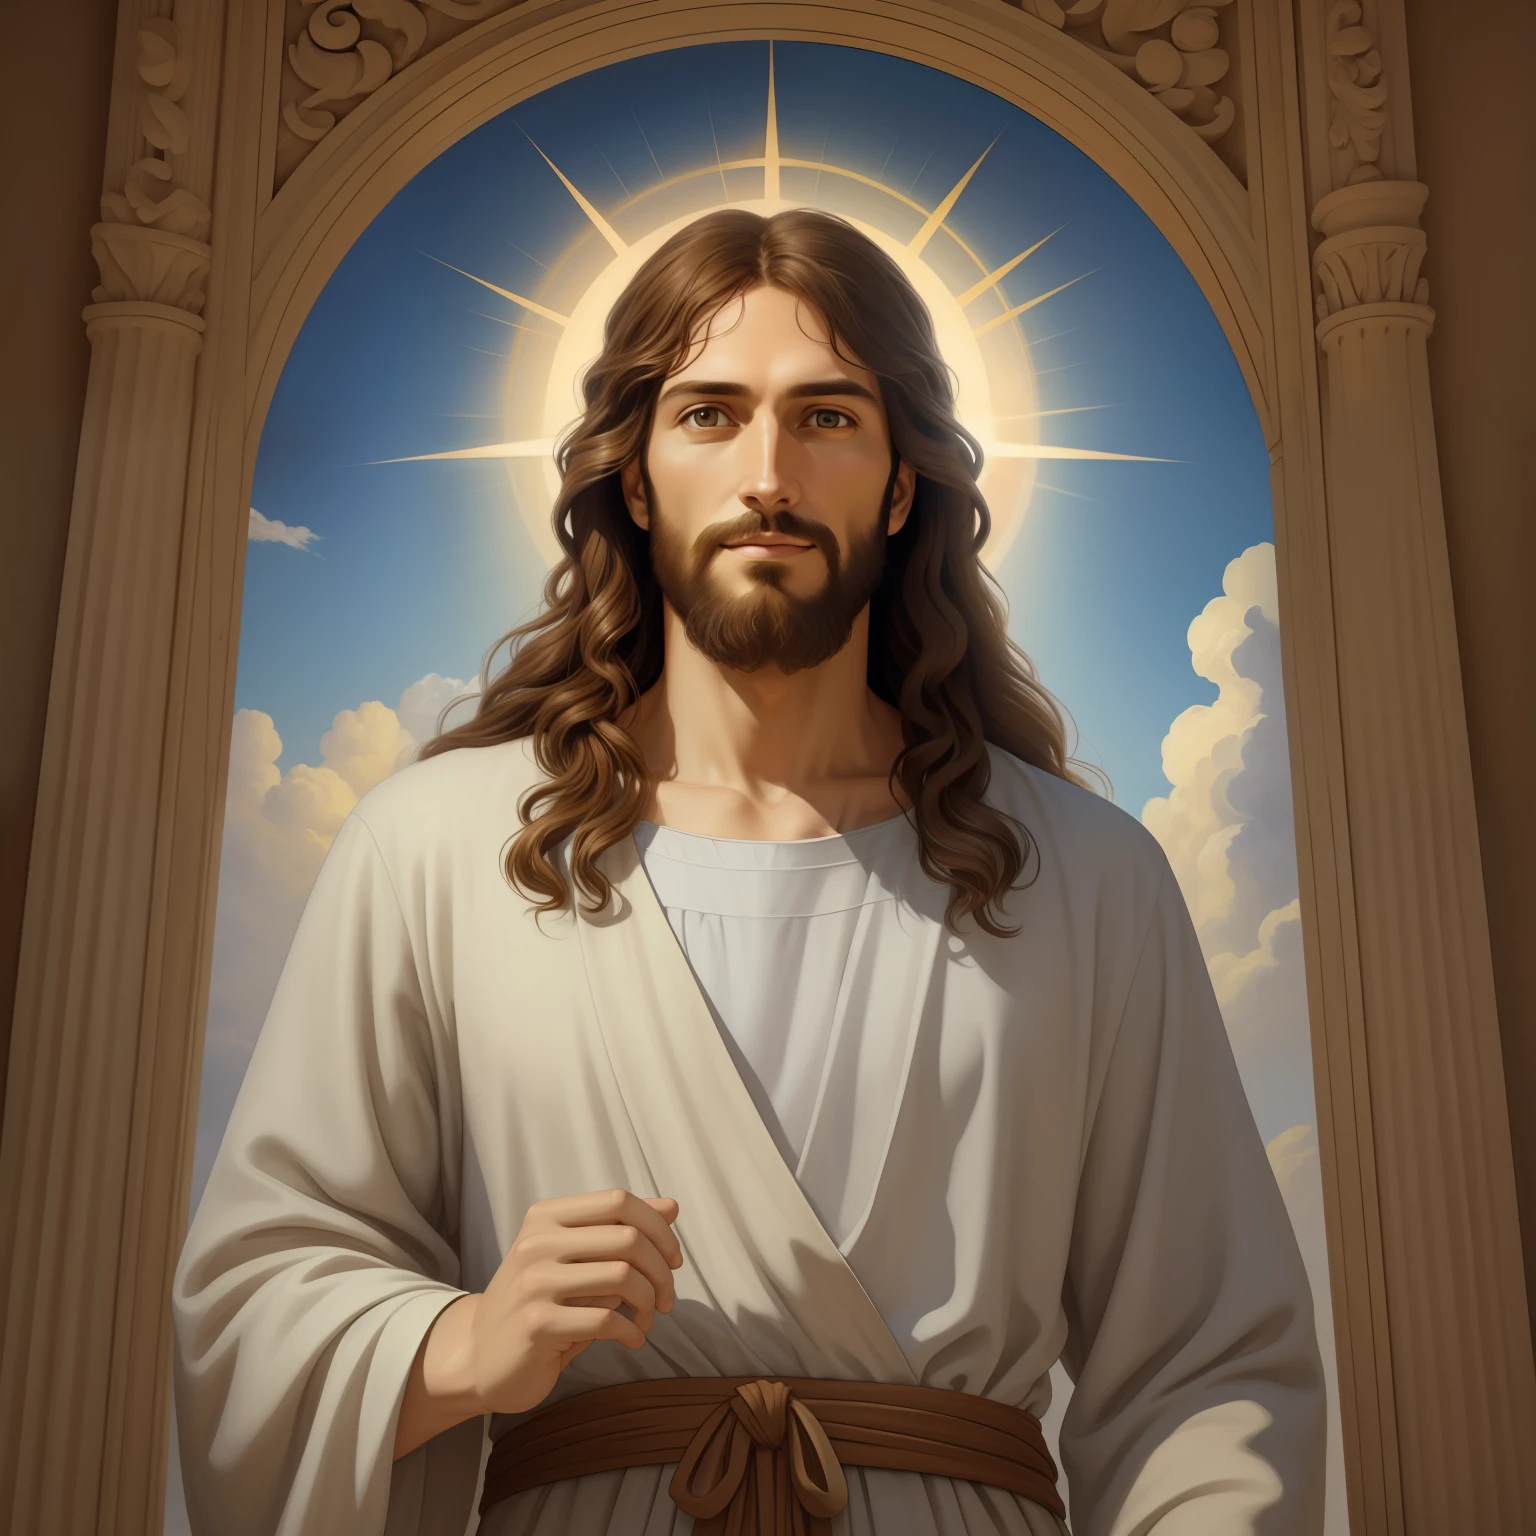 A beautiful ultra-thin 實際的 portrait of Jesus, 先知, 一名男子 34 歲 希伯來文 黑髮, 棕色短发, 長長的棕色鬍子, 和, 穿著胸部封閉的長亞麻外衣, 在前視圖中, 全身, 聖經的, 實際的,迭戈·委拉斯開茲,彼得·保羅·魯本斯,林布蘭,亞歷克斯·羅斯,8K, 概念藝術, Photo實際的, 實際的,  插圖, 油畫, 超現實主義, Hyper實際的, 數位藝術, 風格, watercolor 
a 3D 實際的 of 耶穌 和 a halo in the sky, 耶穌 christ, 在天堂微笑, portrait of 耶穌 christ, 耶穌 face, 第33章 少年全能神, 天上神的肖像, 格雷格·奧爾森, gigachad 耶穌, 耶穌 of nazareth, 耶穌, 神的臉, 上帝看著我, 他正在熱情地跟你打招呼, 他很高興, 头像图片